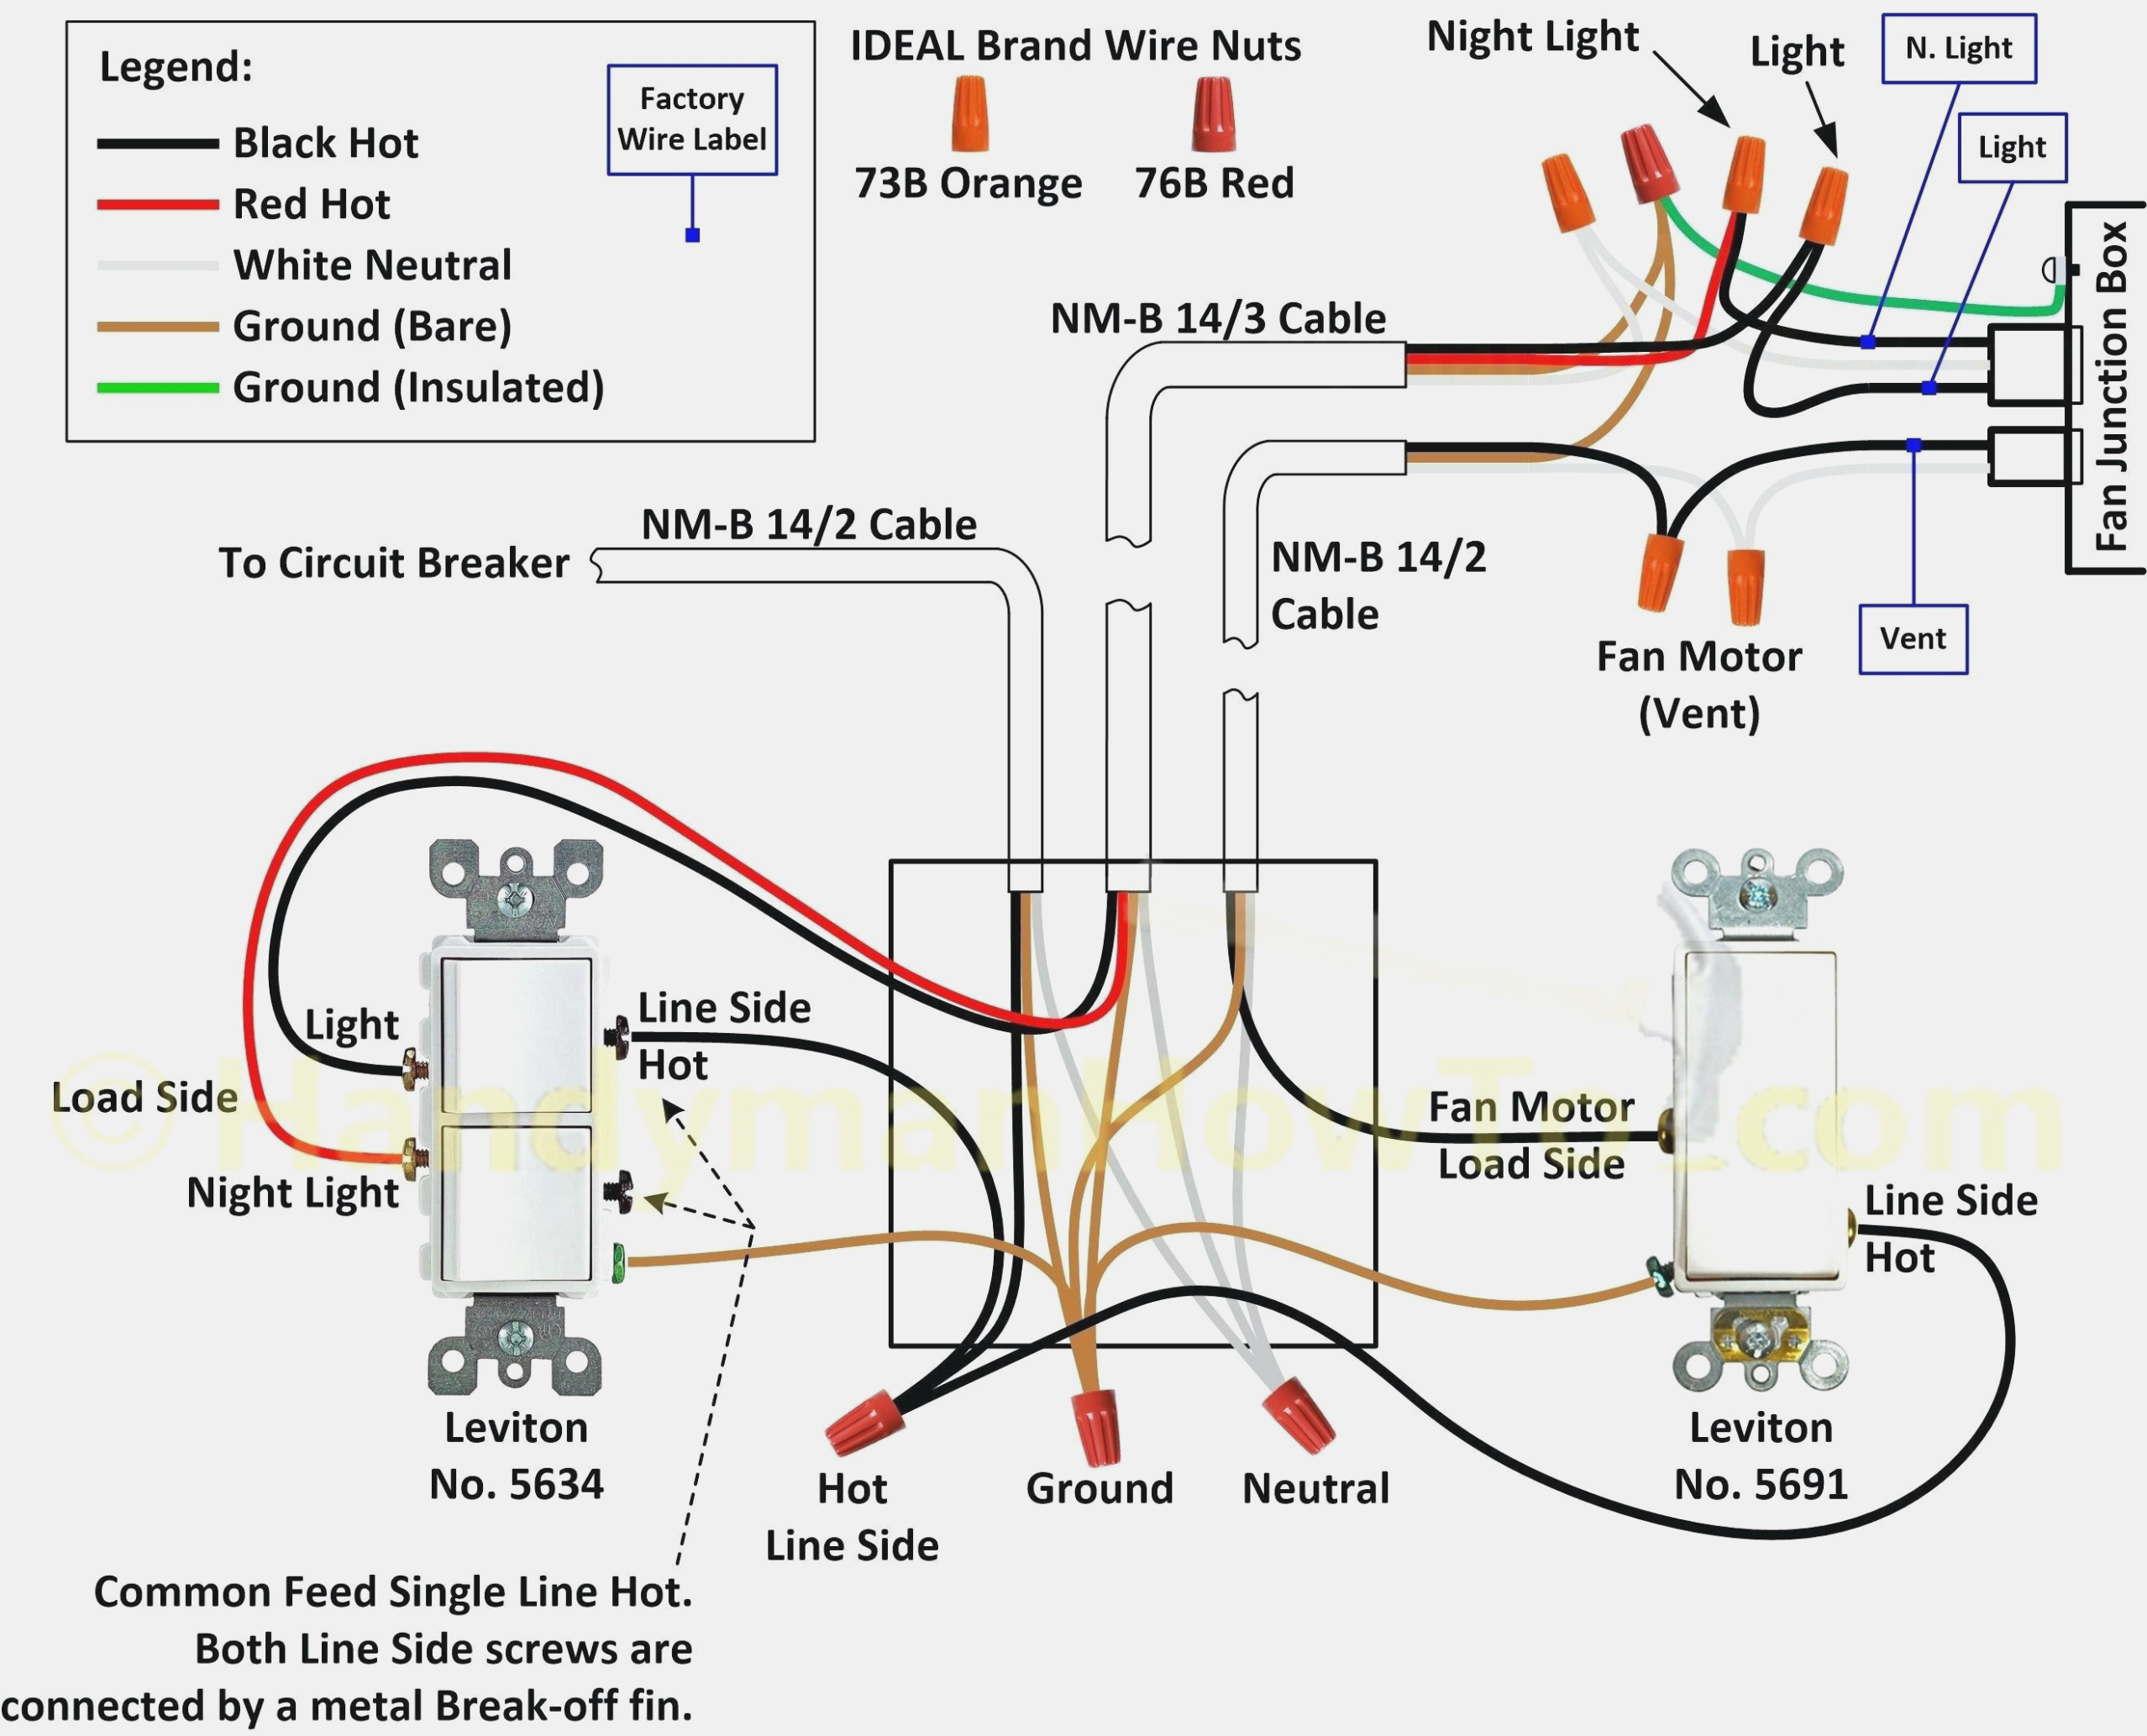 Graphix Lutron Wiring Diagram - Wiring Diagram Name - Lutron 3 Way Dimmer Switch Wiring Diagram